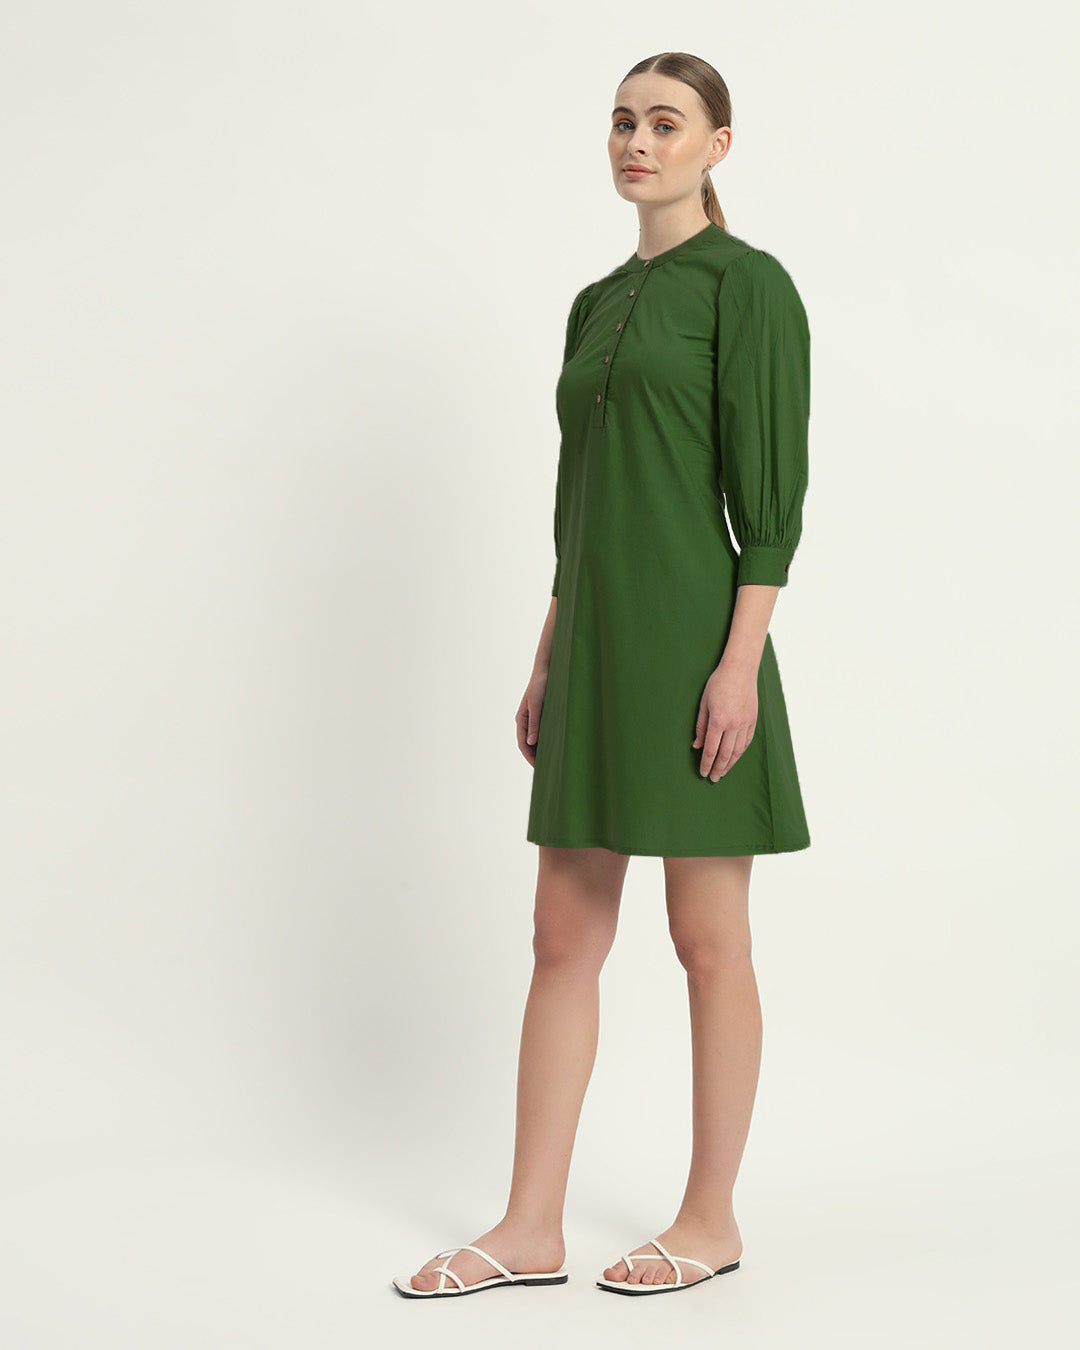 The Roslyn Emerald Cotton Dress